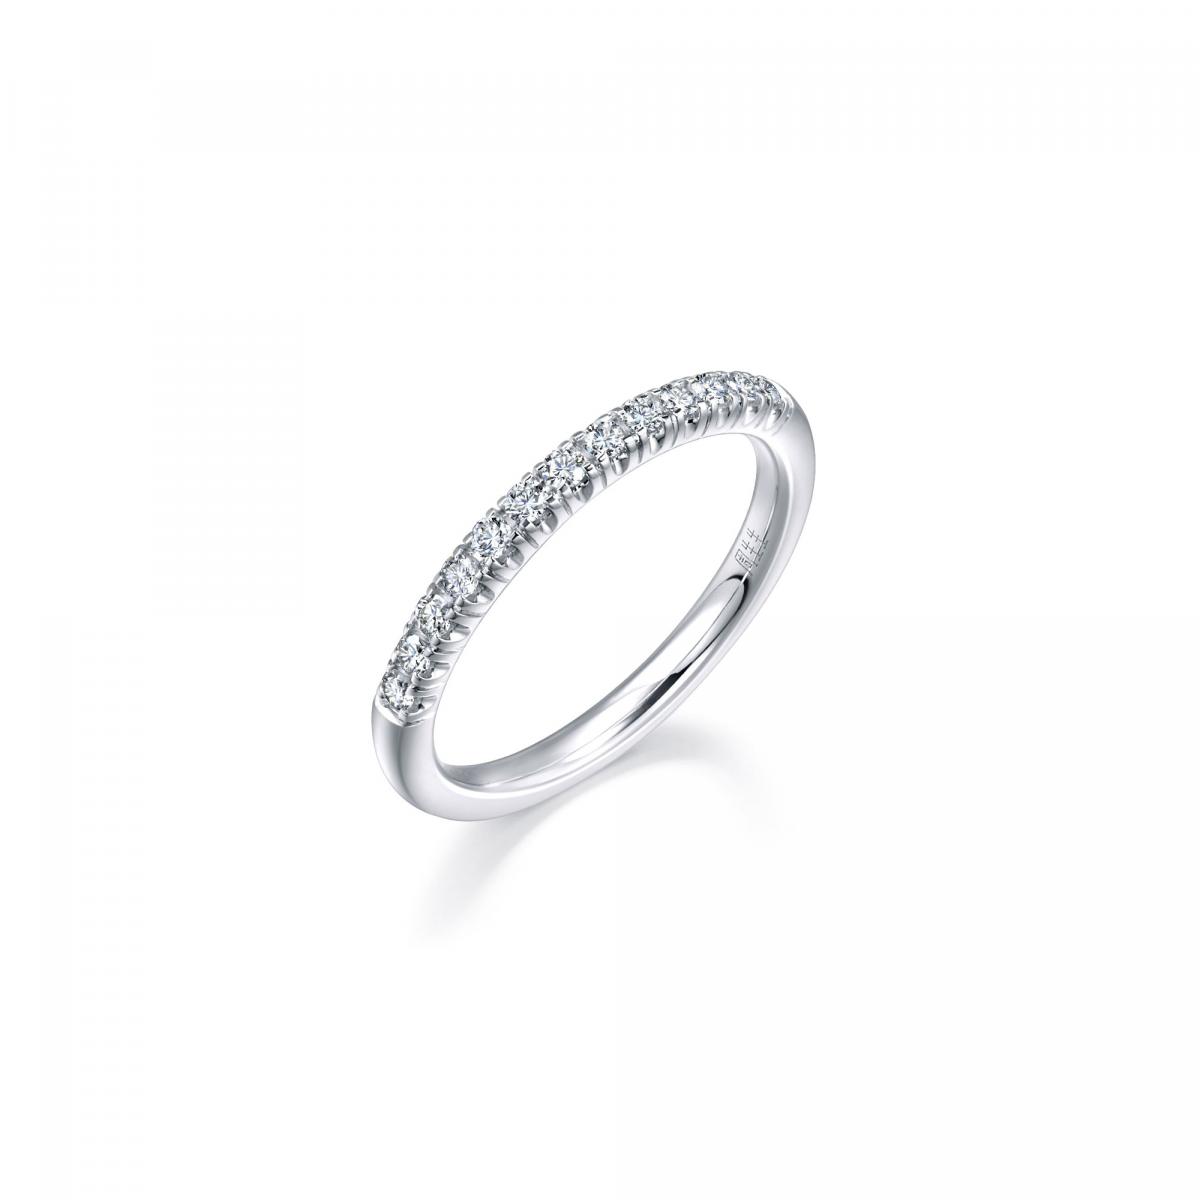 PROMESSA 'Starry' 18K White Gold Diamond Ring